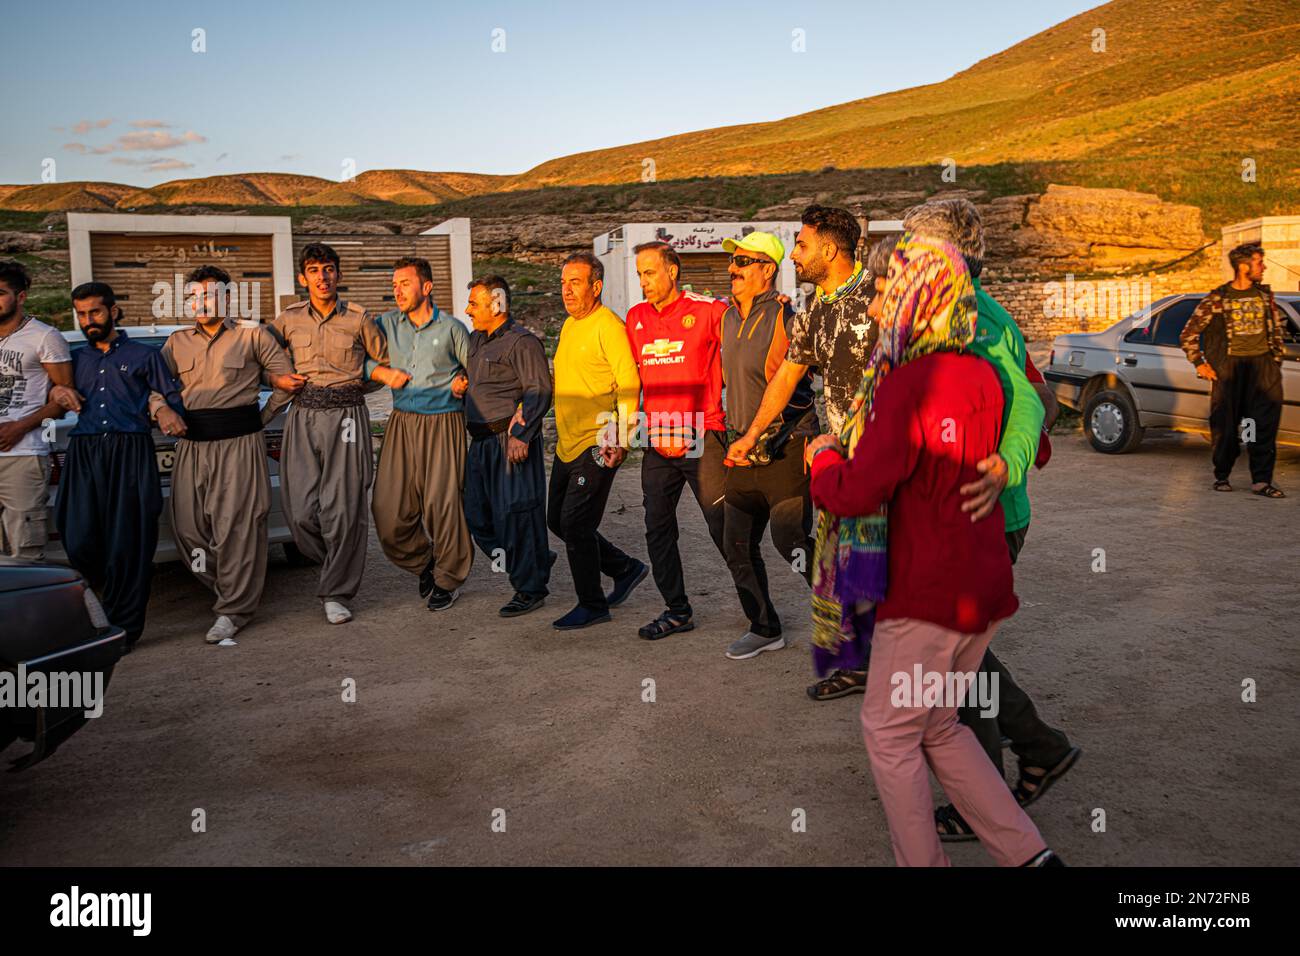 A group of Kurdish people dancing near Takht-e Soleyman in West Azerbaijan Province, Iran Stock Photo